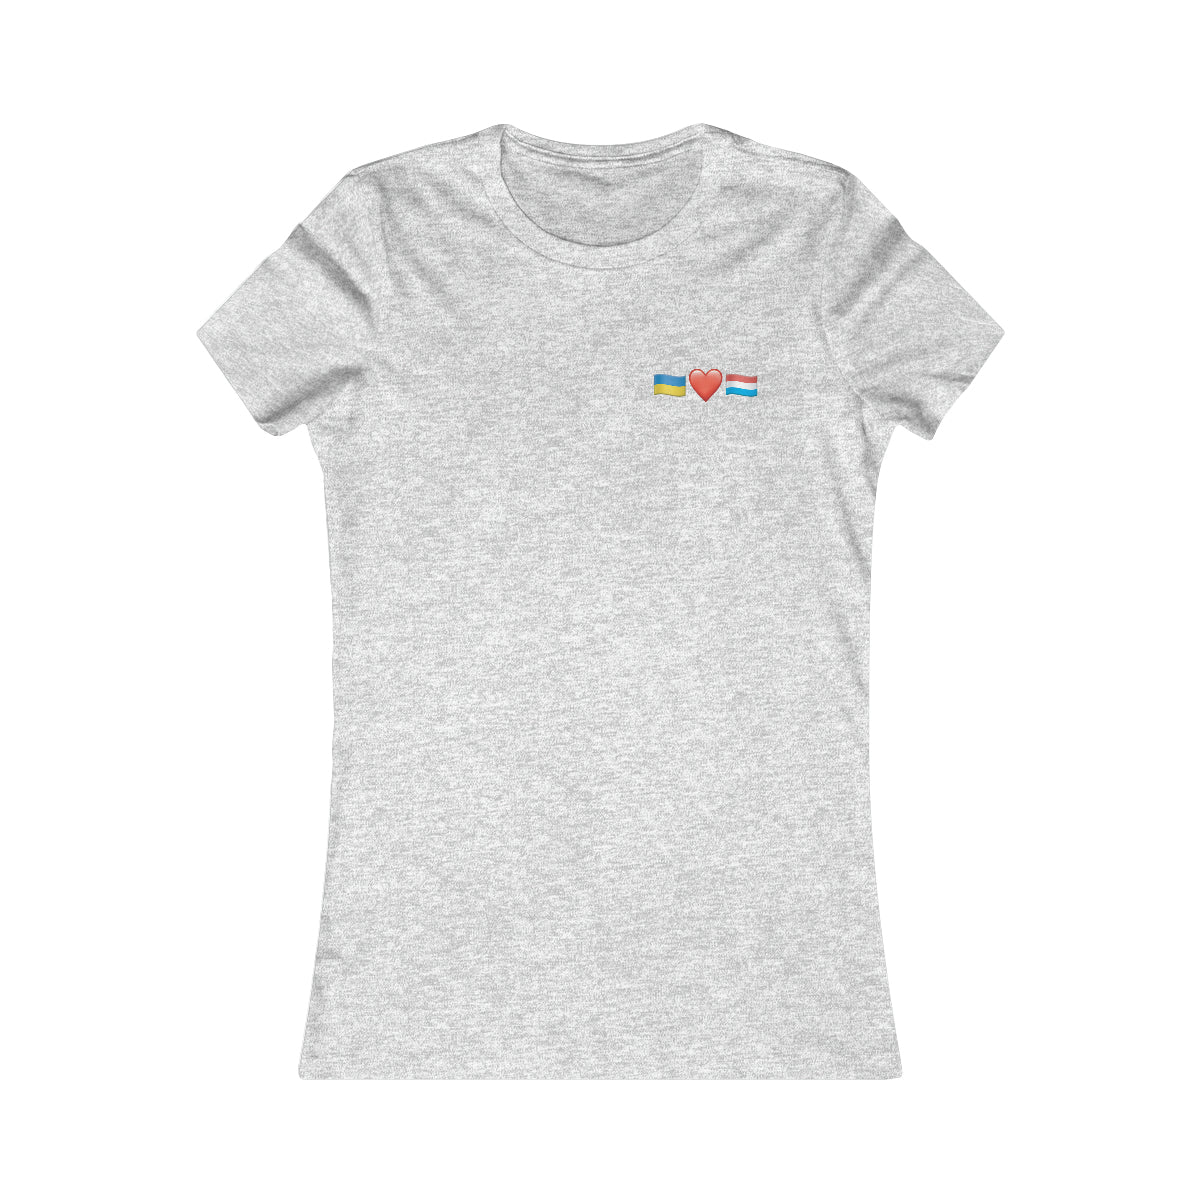 卢森堡的 Support Minimalistic - 女性最喜欢的 T 恤